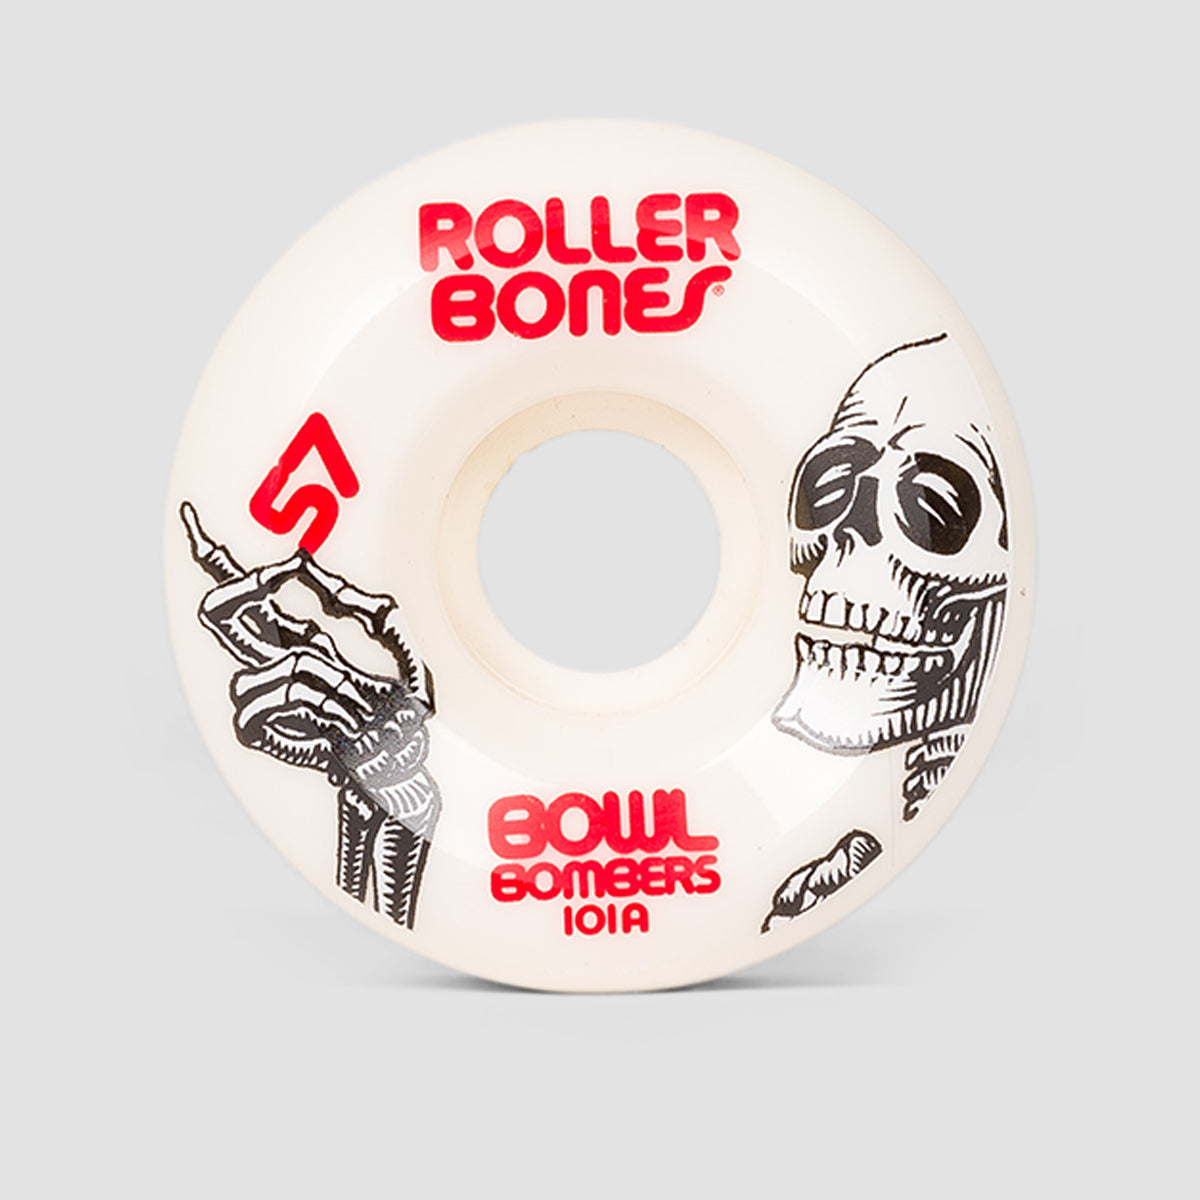 Rollerbones Bowl Bombers 101a Quad Wheels x8 White 57mm